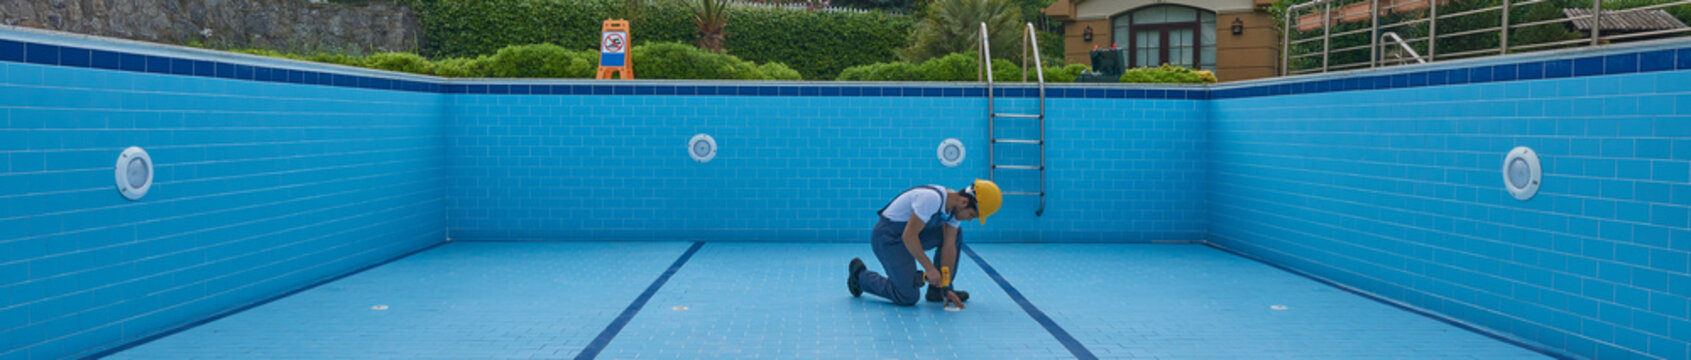 Repairman is repairing pool with equipment. Pool maintenance style.